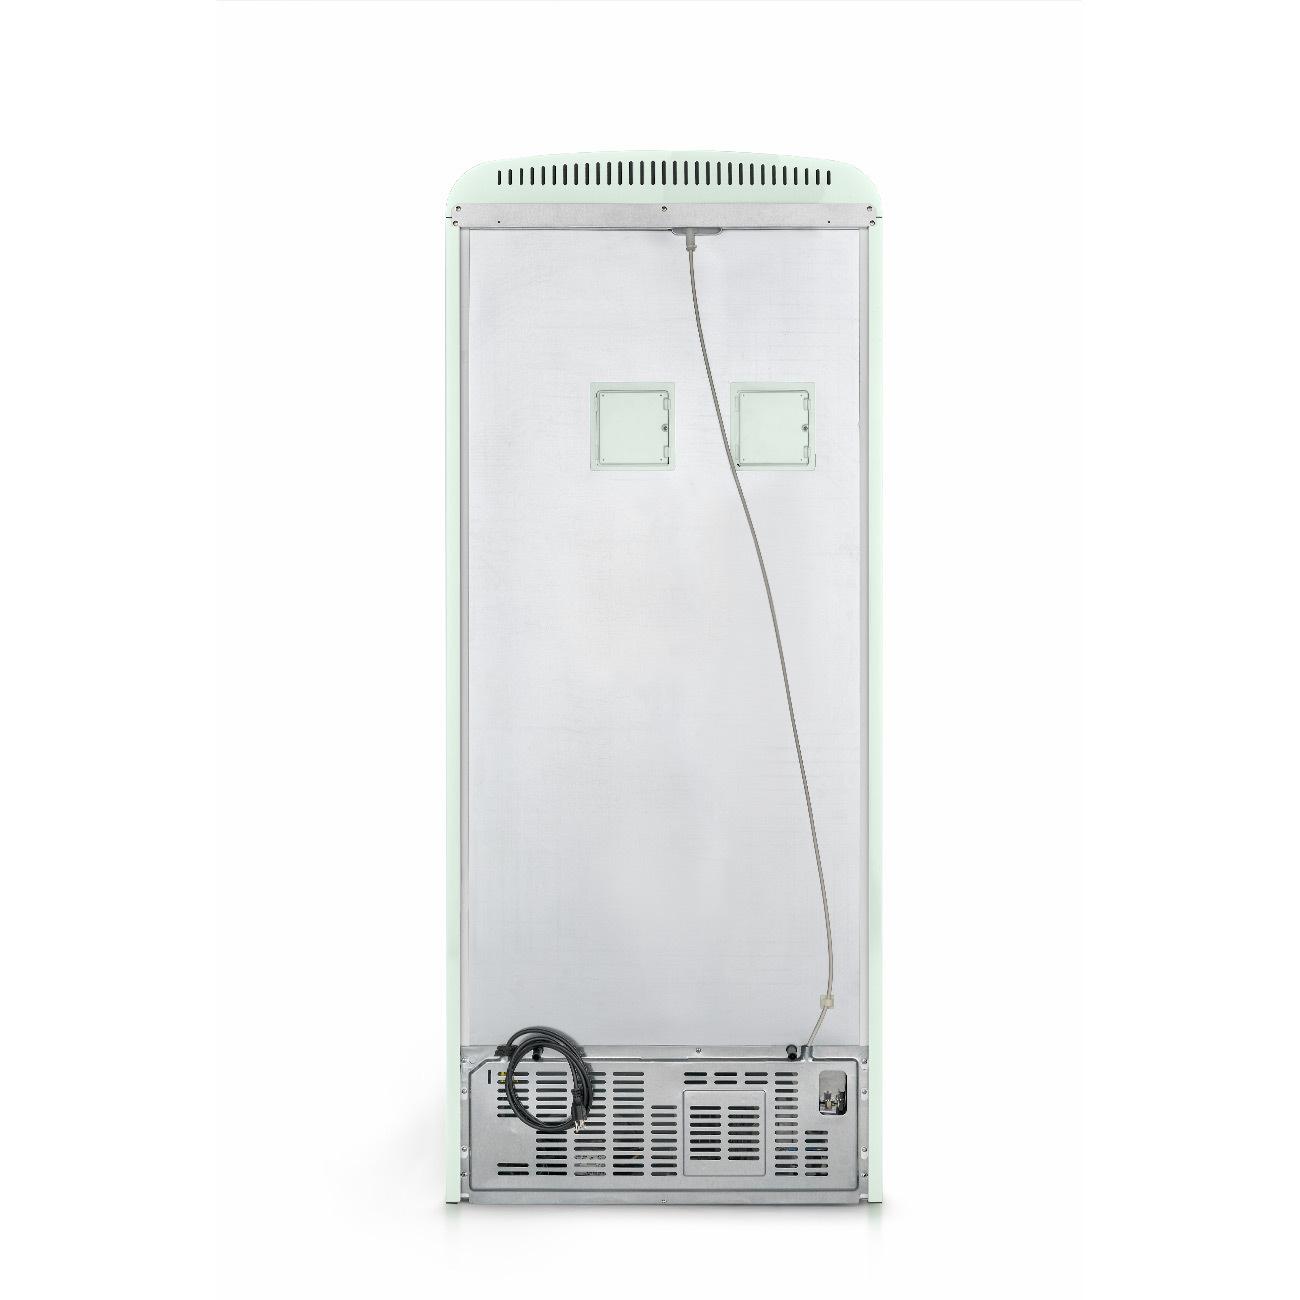 Smeg FAB50URPG3 Refrigerator Pastel Green Fab50Urpg3